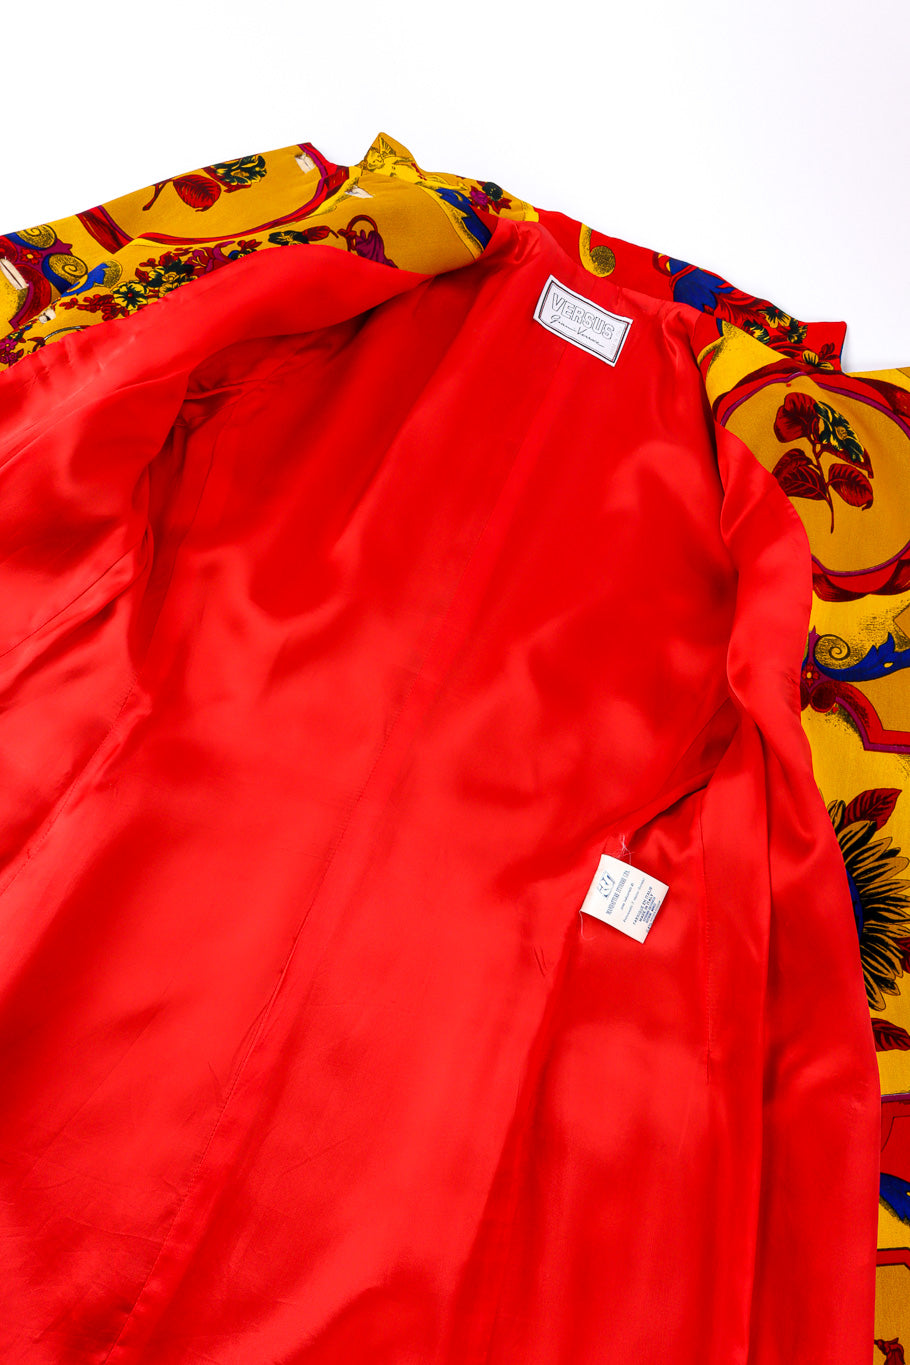 Jacket and shorts set by Versus Versace jacket lining @recessla